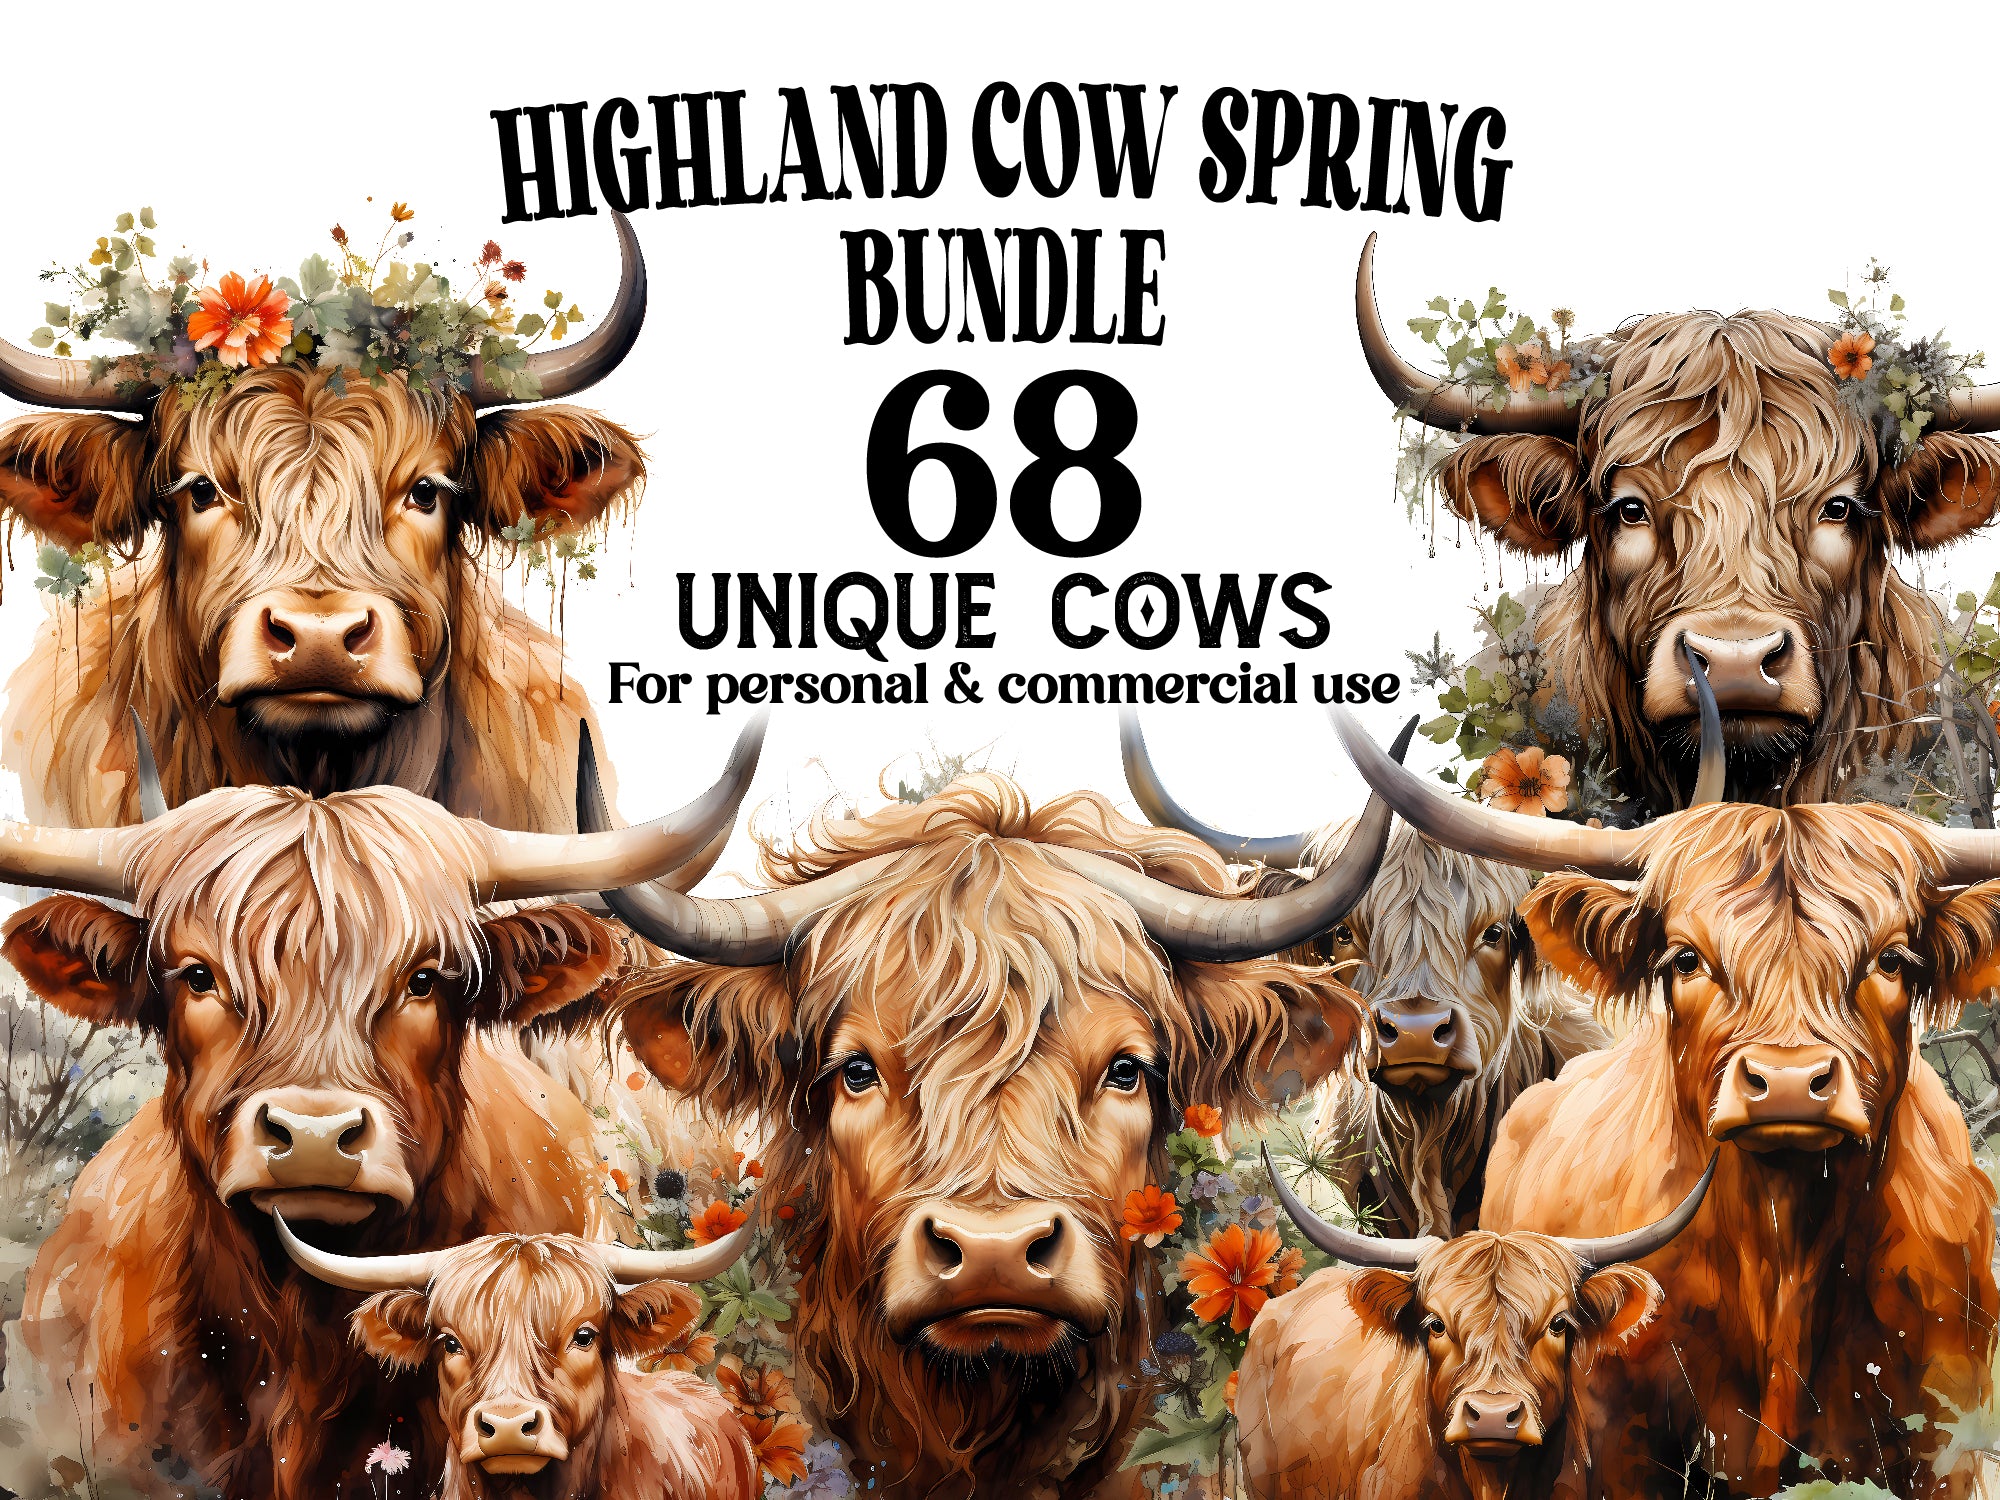 Highland Cow Spring Clipart - CraftNest